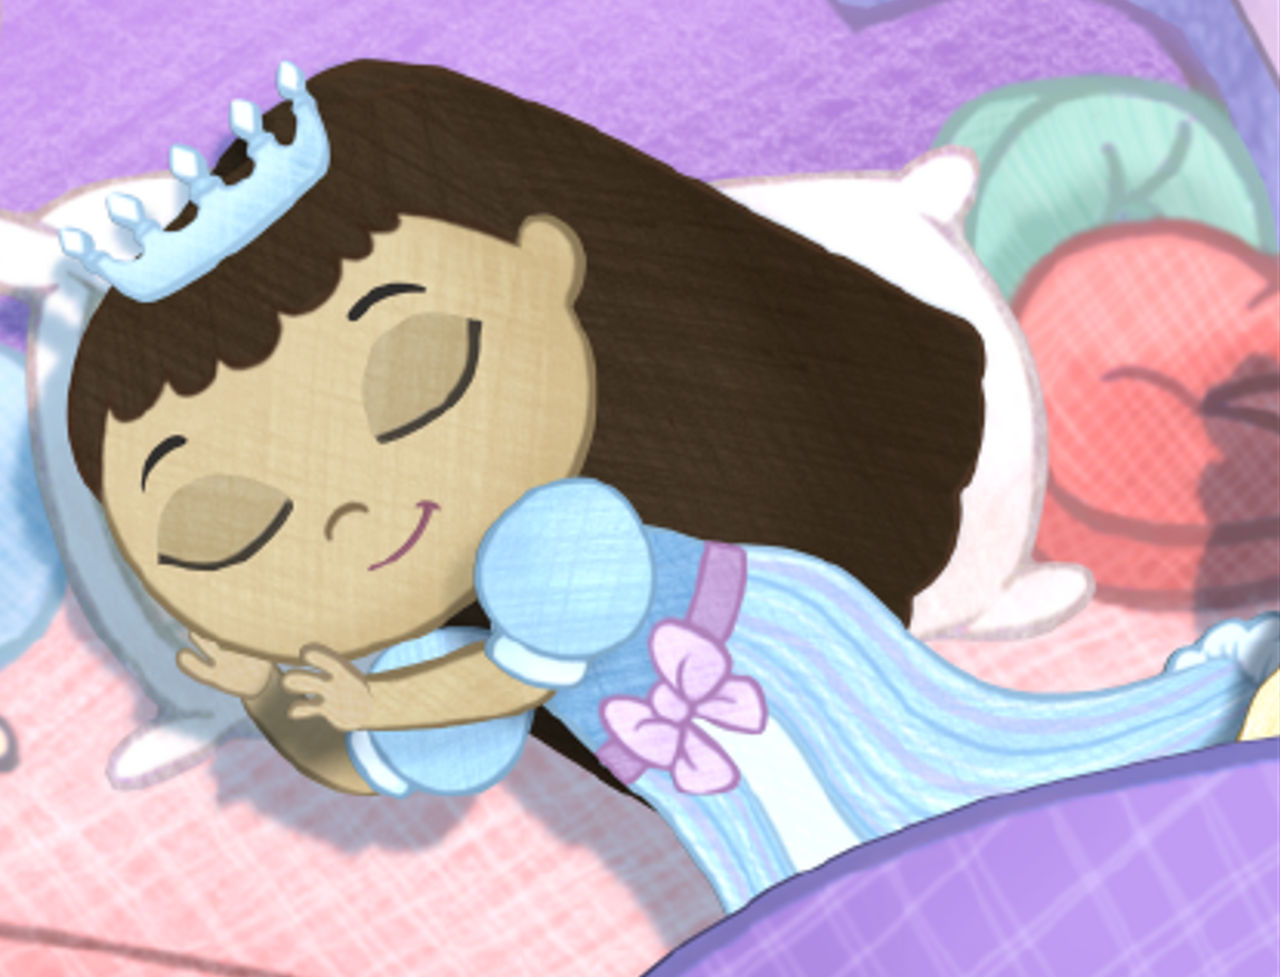 Sleeping Beauty Sleeping In Her Bed By Justinproffesional On Deviantart